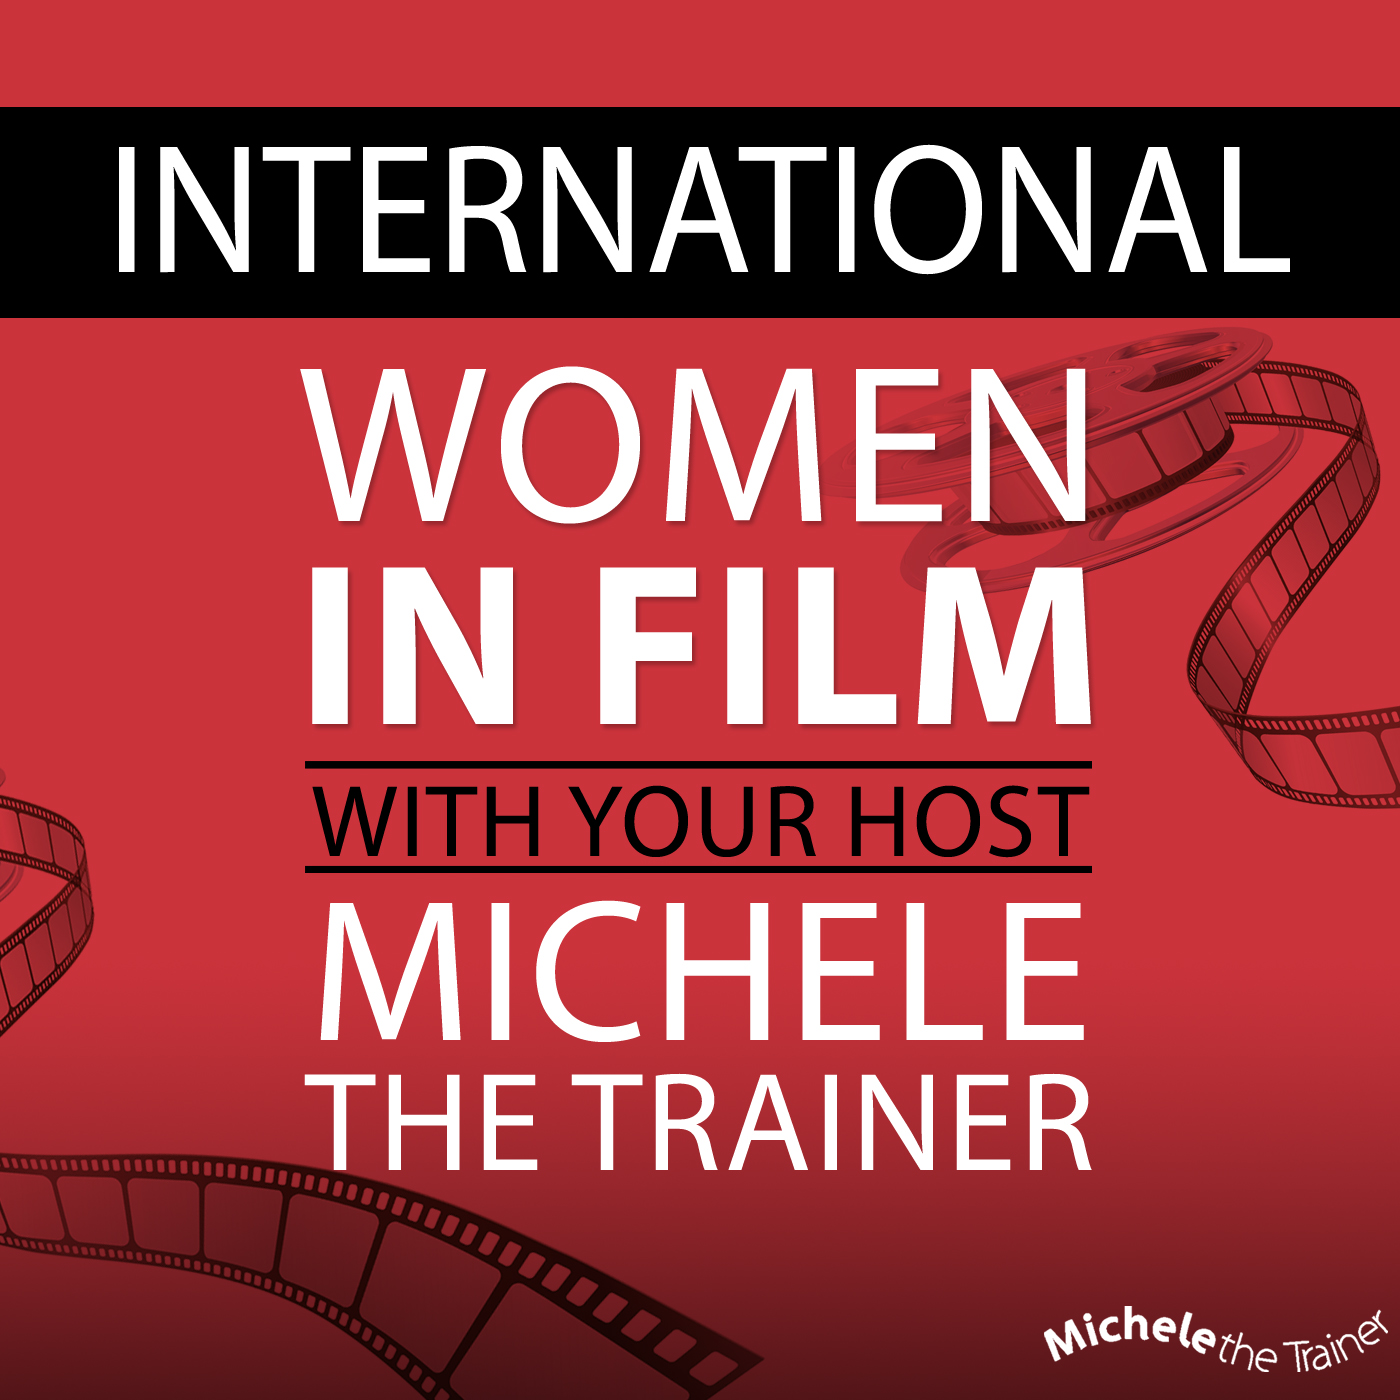 12_MicheleHall_UnderwaterFilmProducer_EmmyWinningImax_International Women In Film with Michele the Trainer